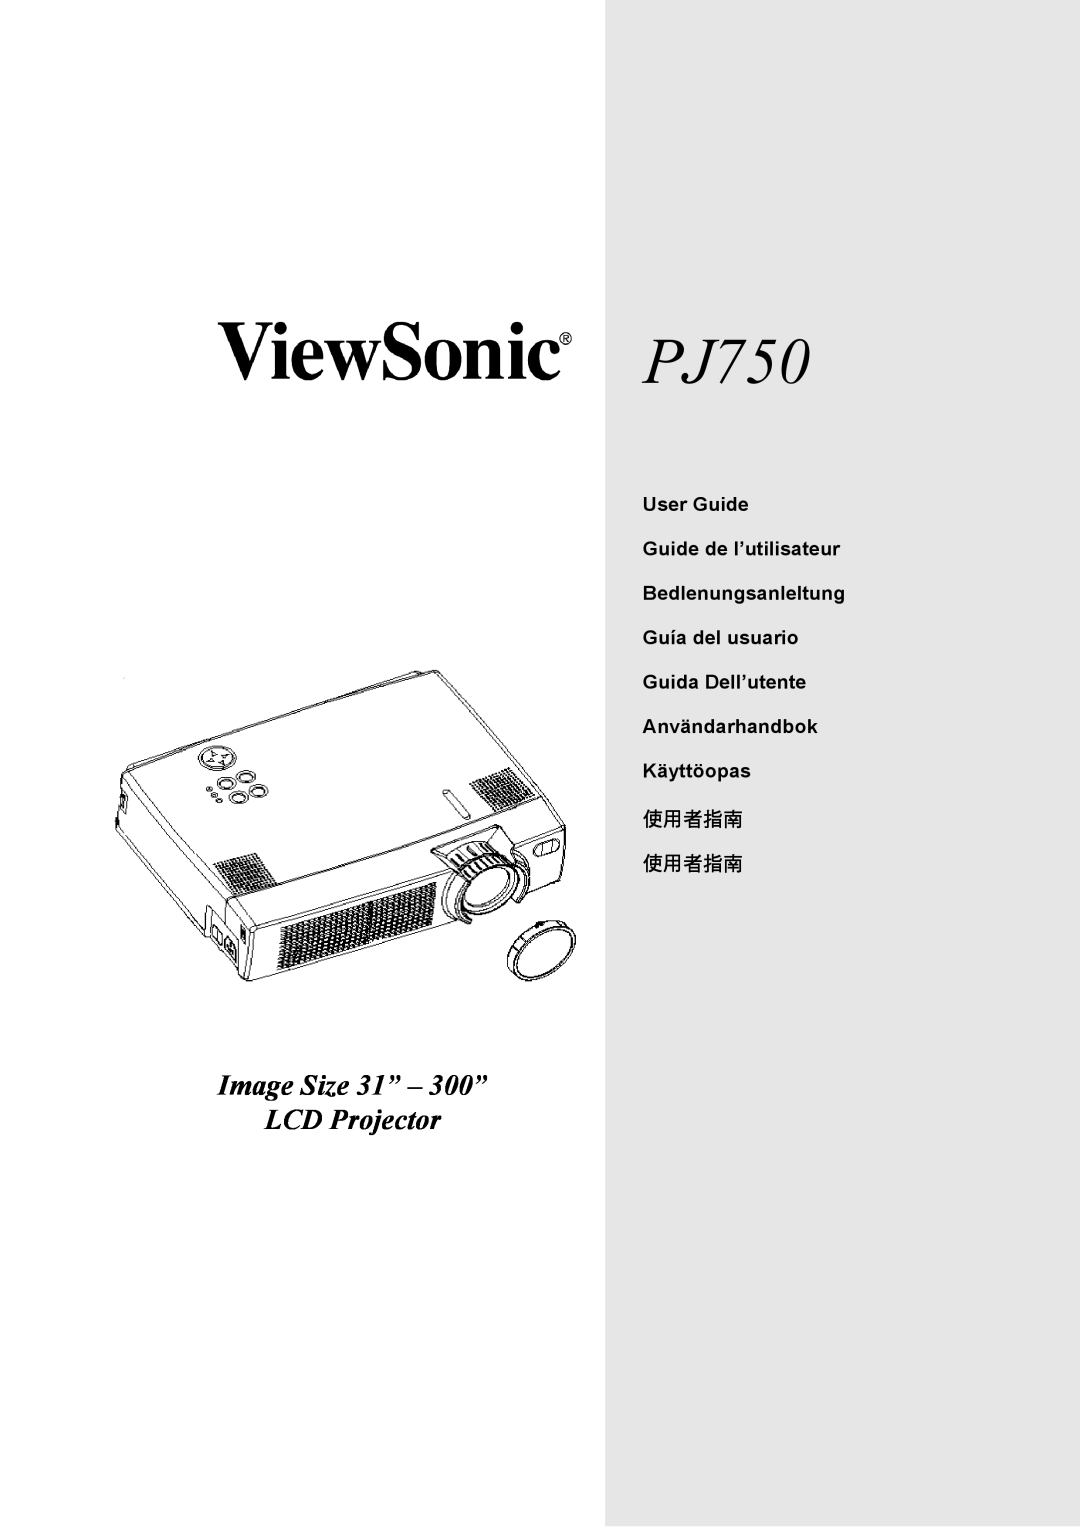 ViewSonic manual PJ750, Image Size 31” - 300” LCD Projector, 使用者指南 使用者指南 